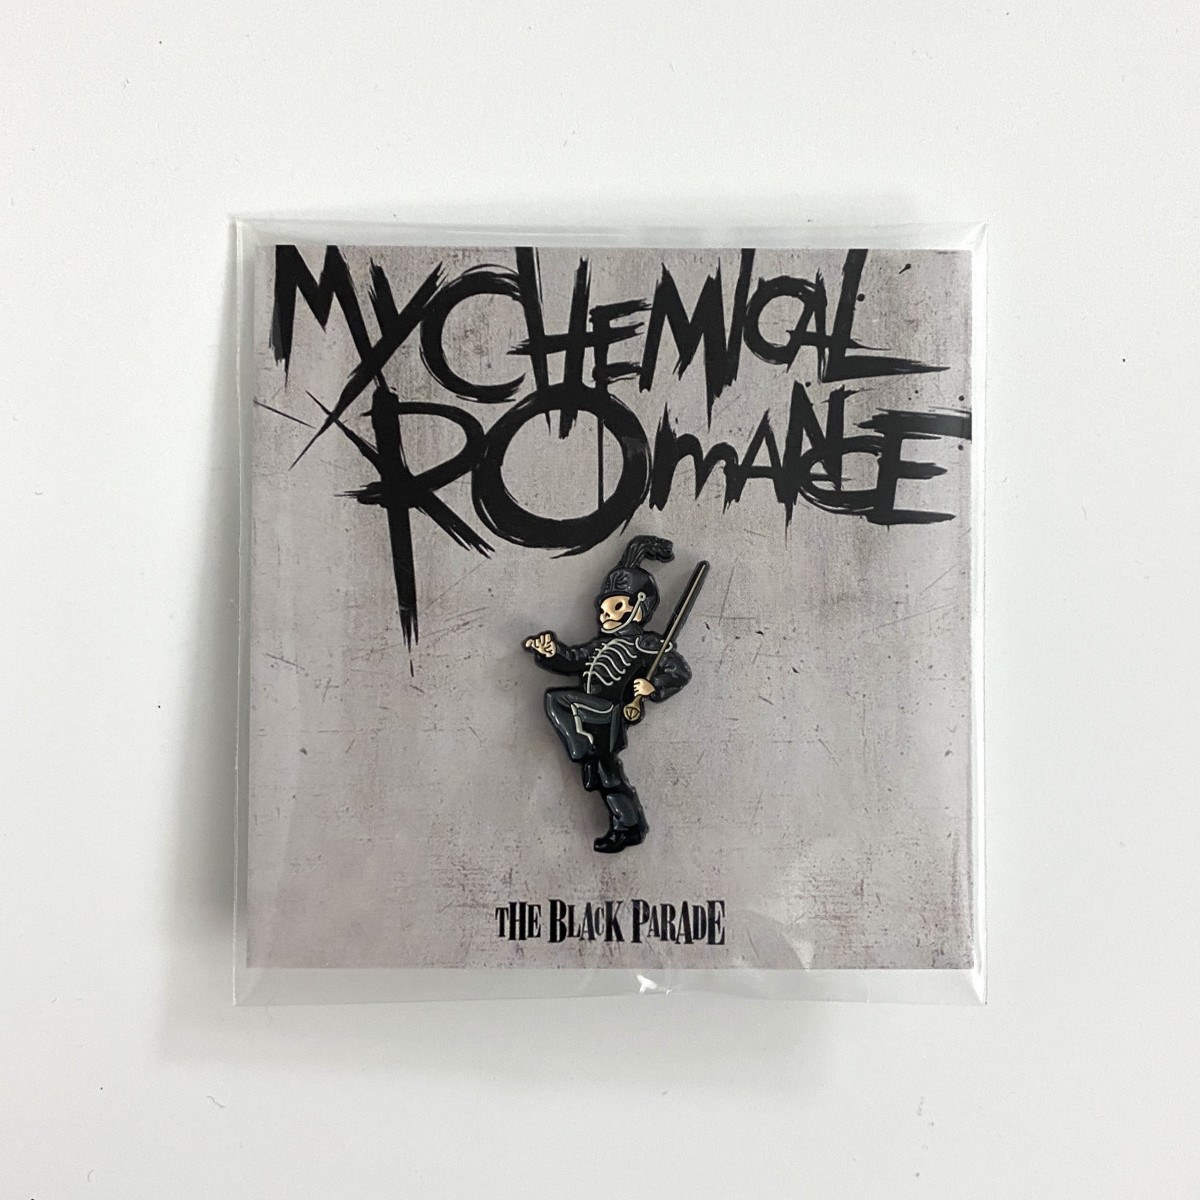 Значок Black Parade / My Chemical Romance фото